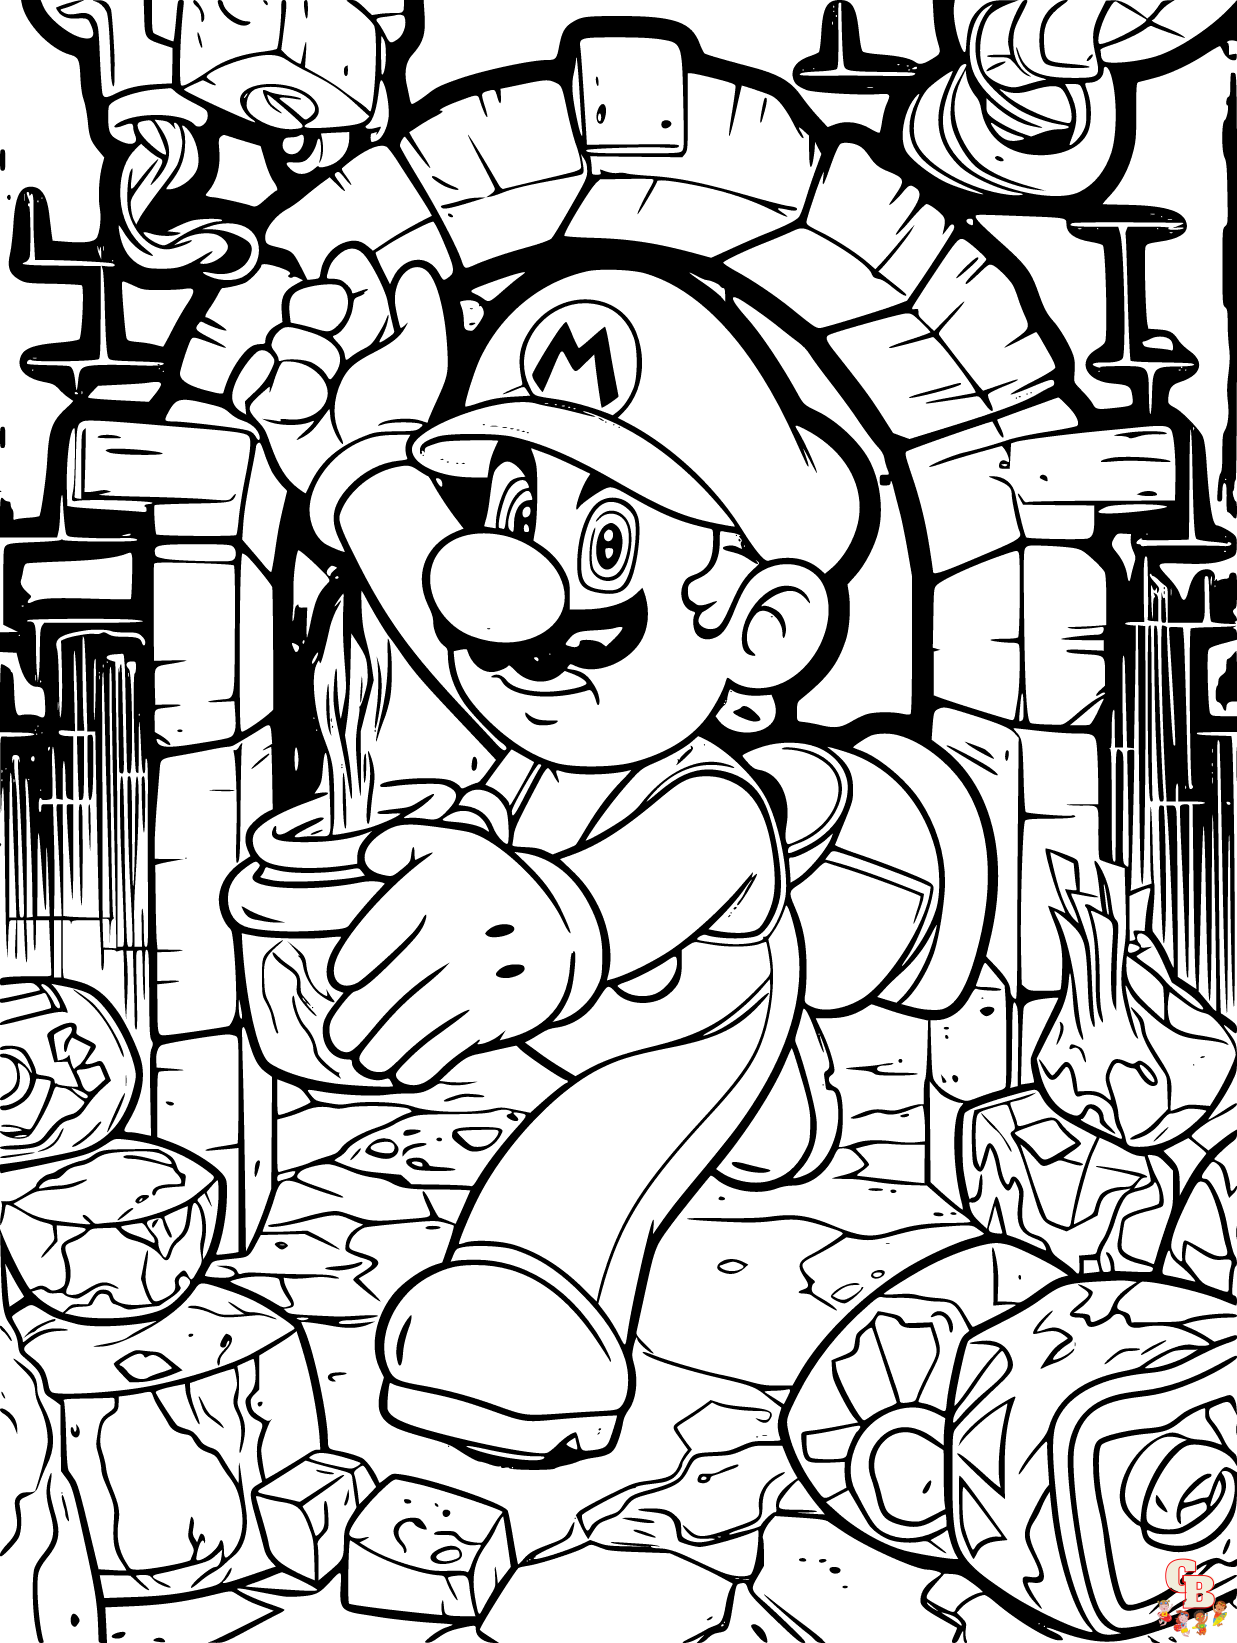 Super Mario coloring pages easy 1